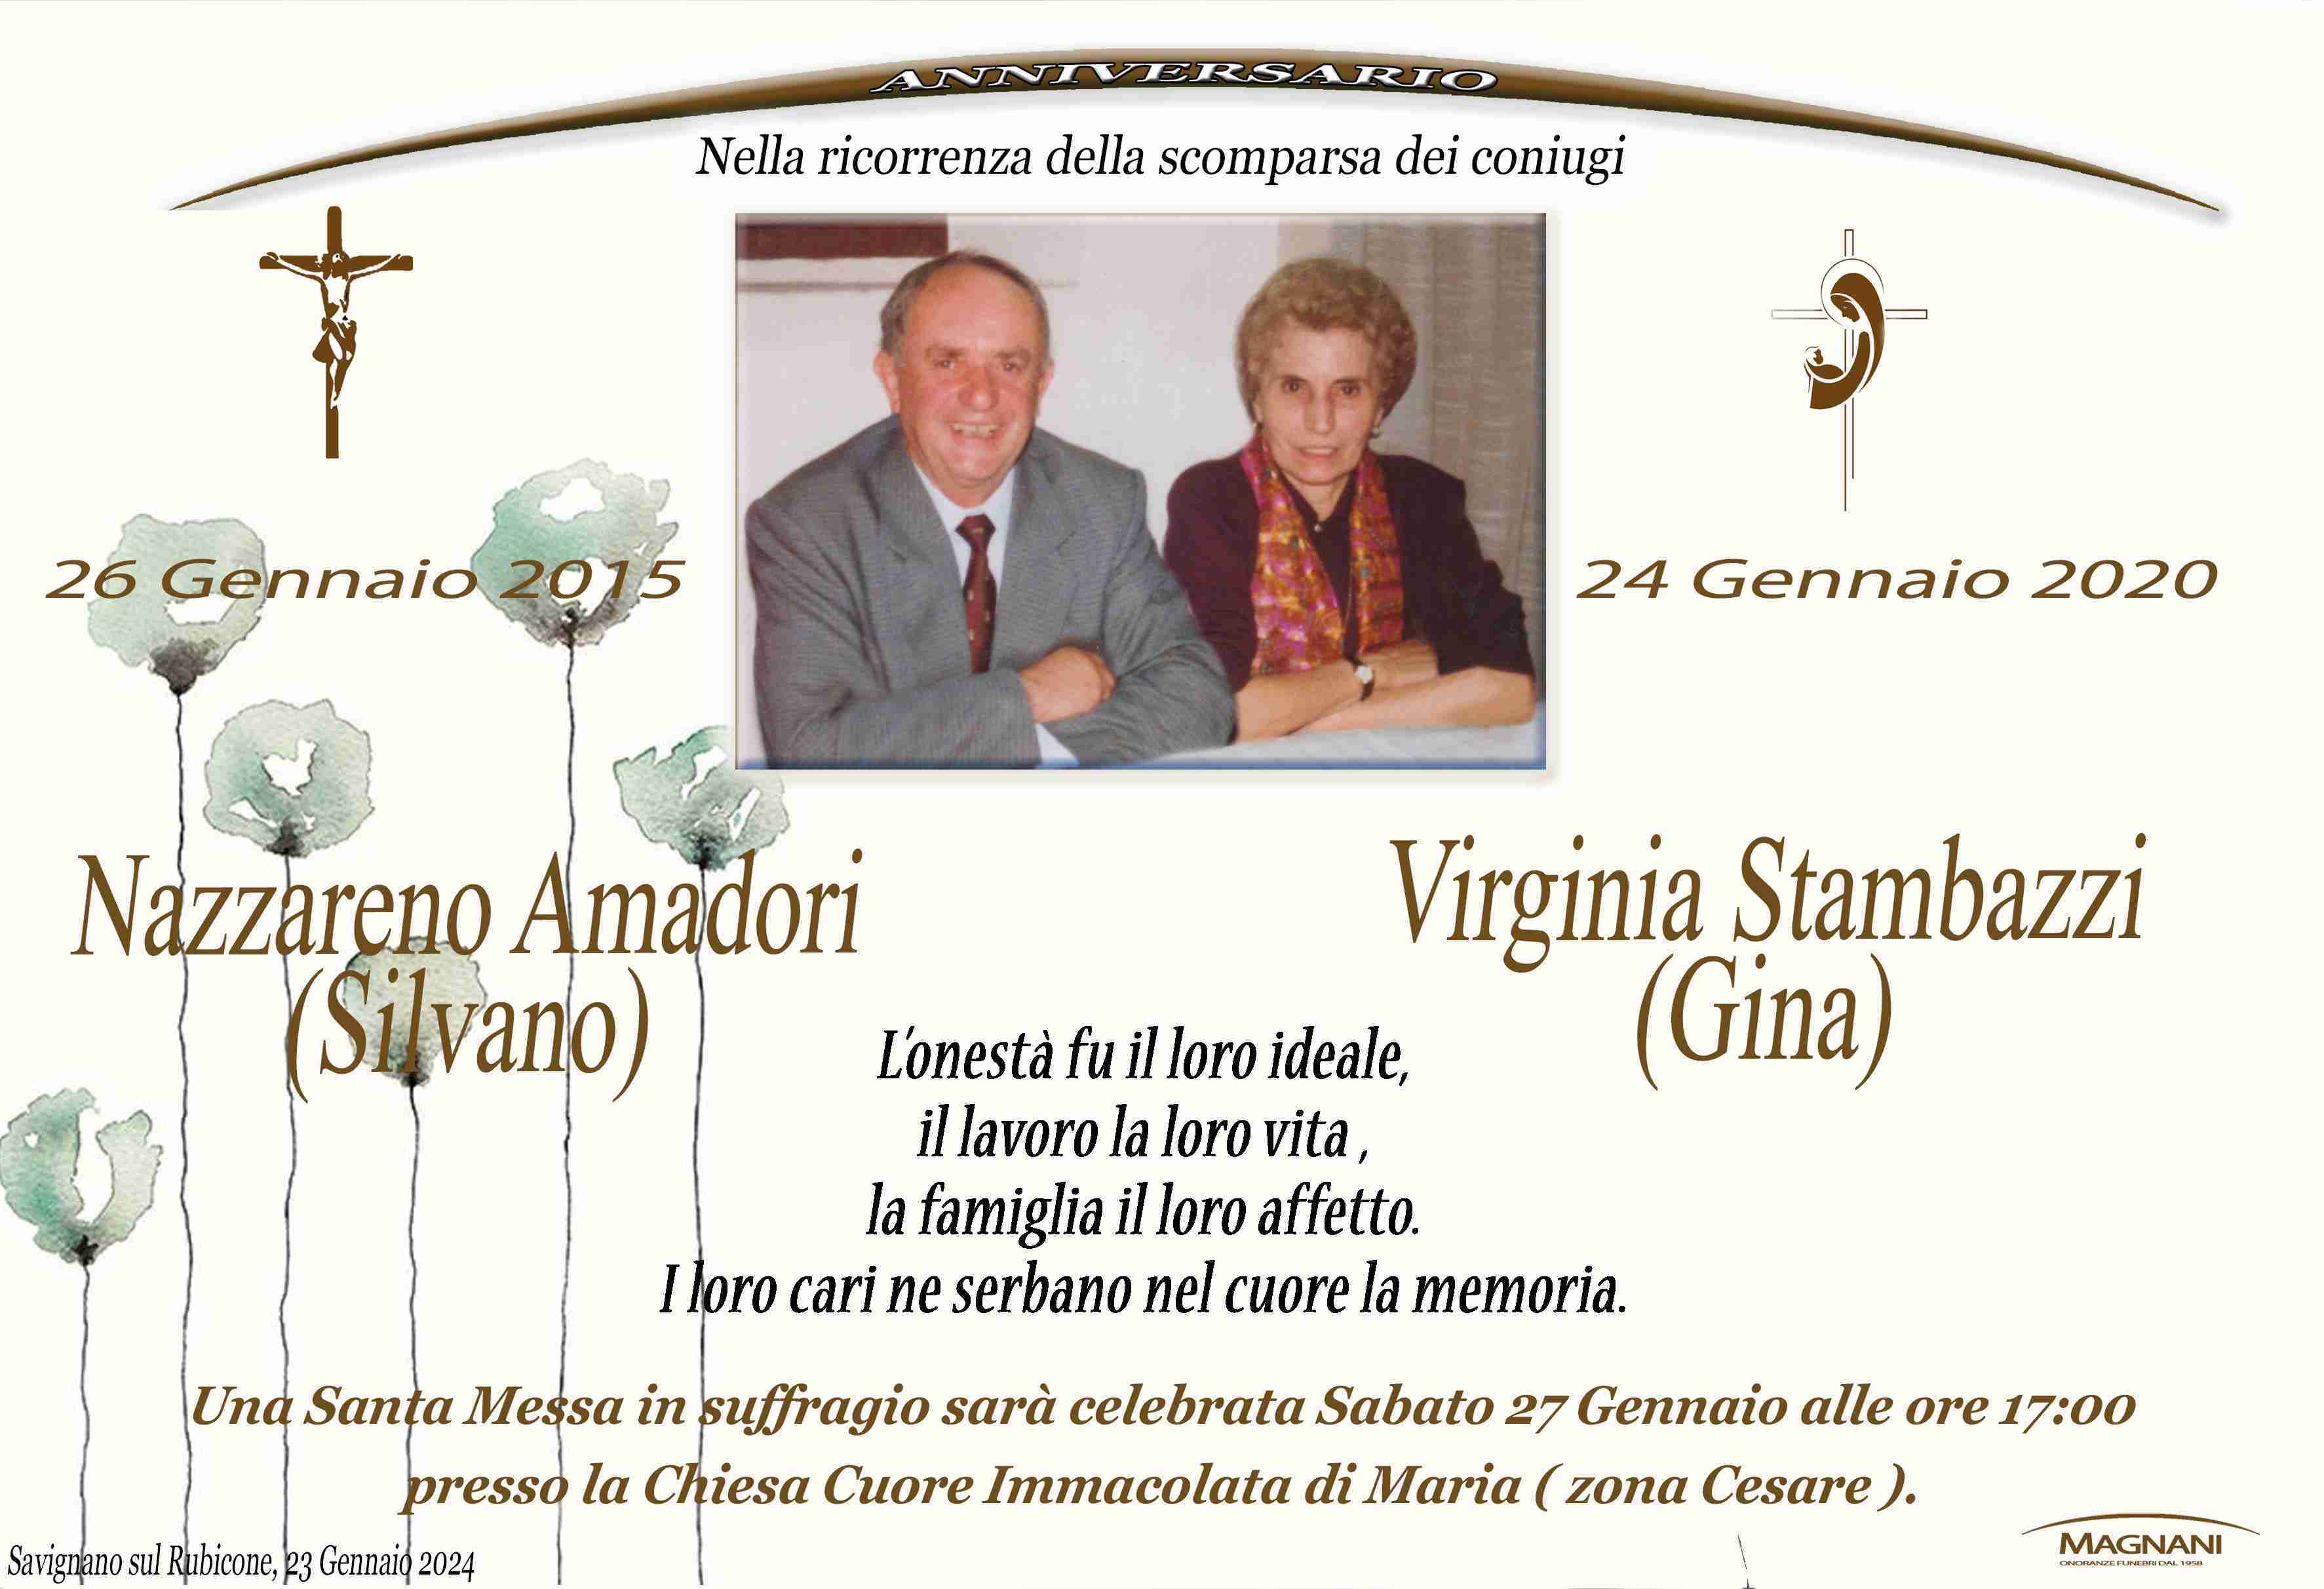 Nazzareno Amadori e Virginia Stambazzi